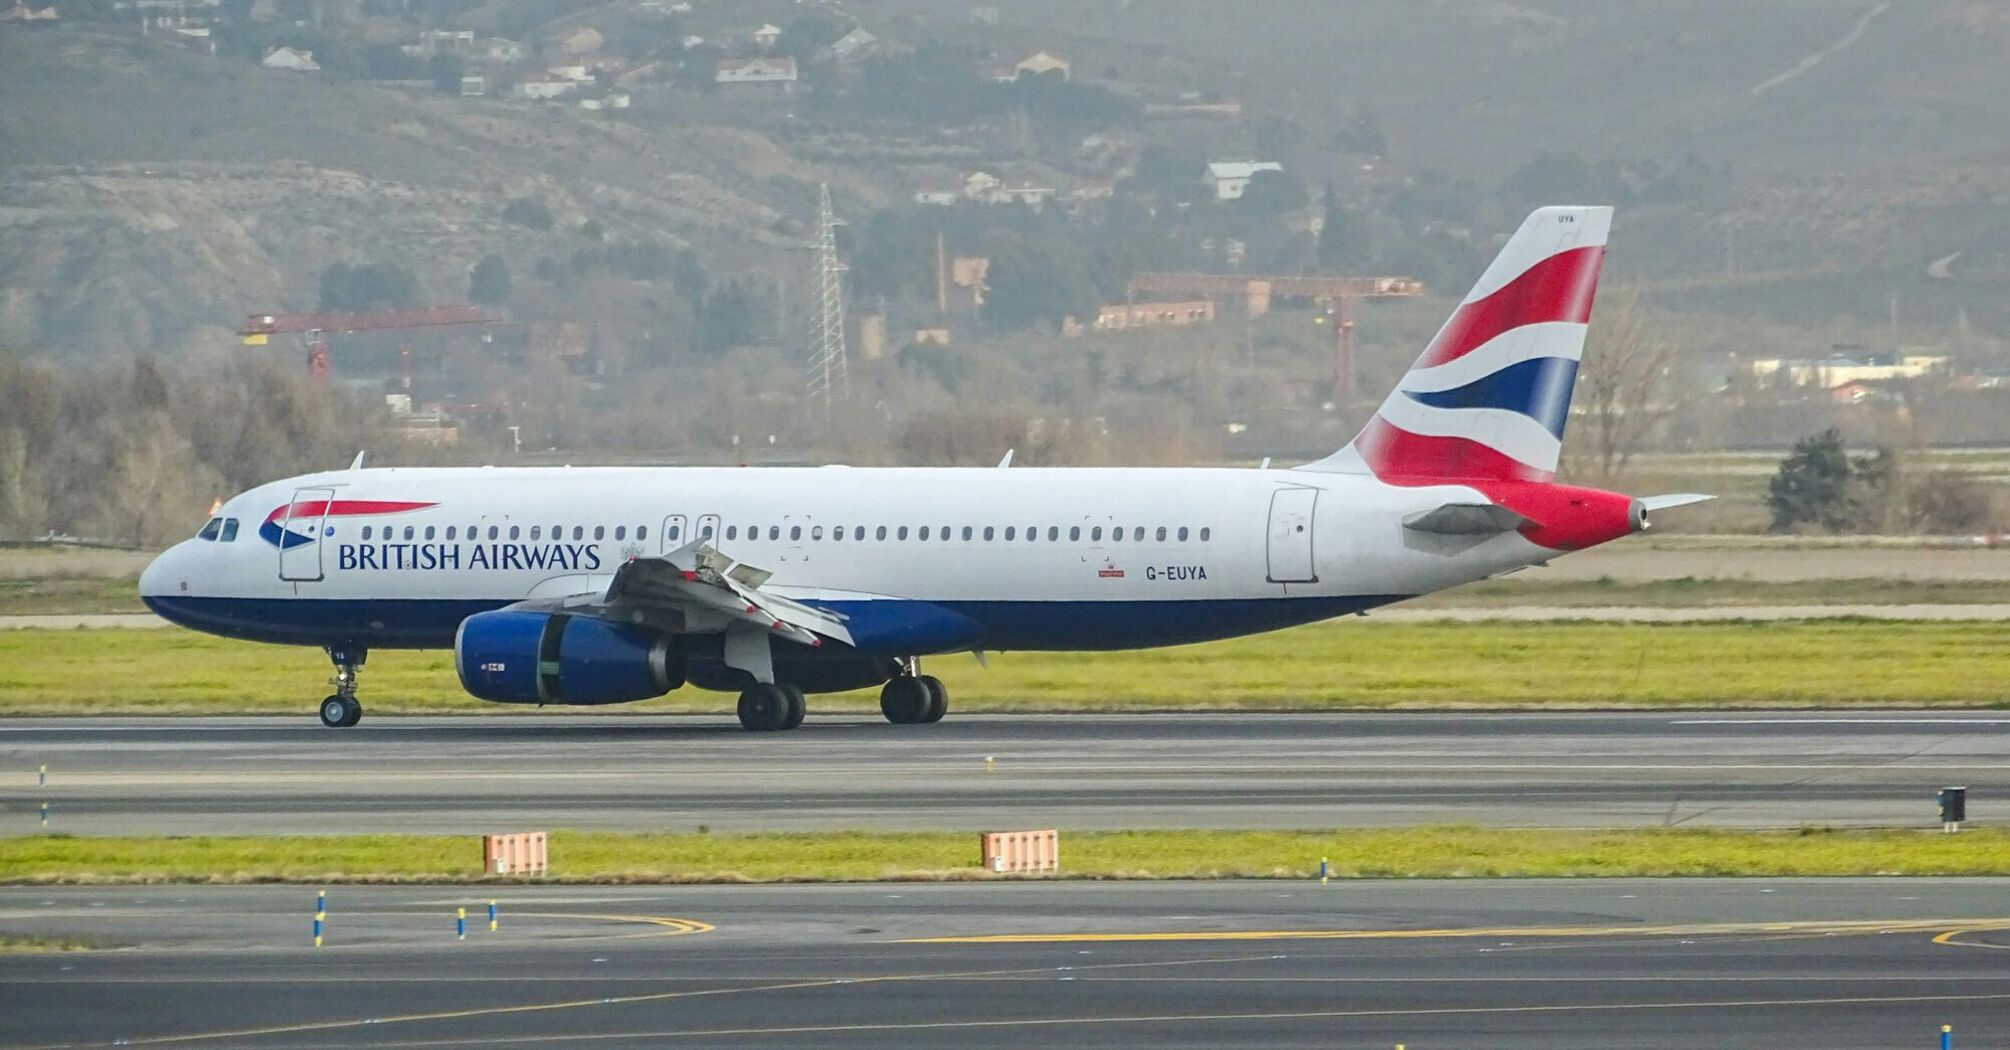 British airways plane on the runway